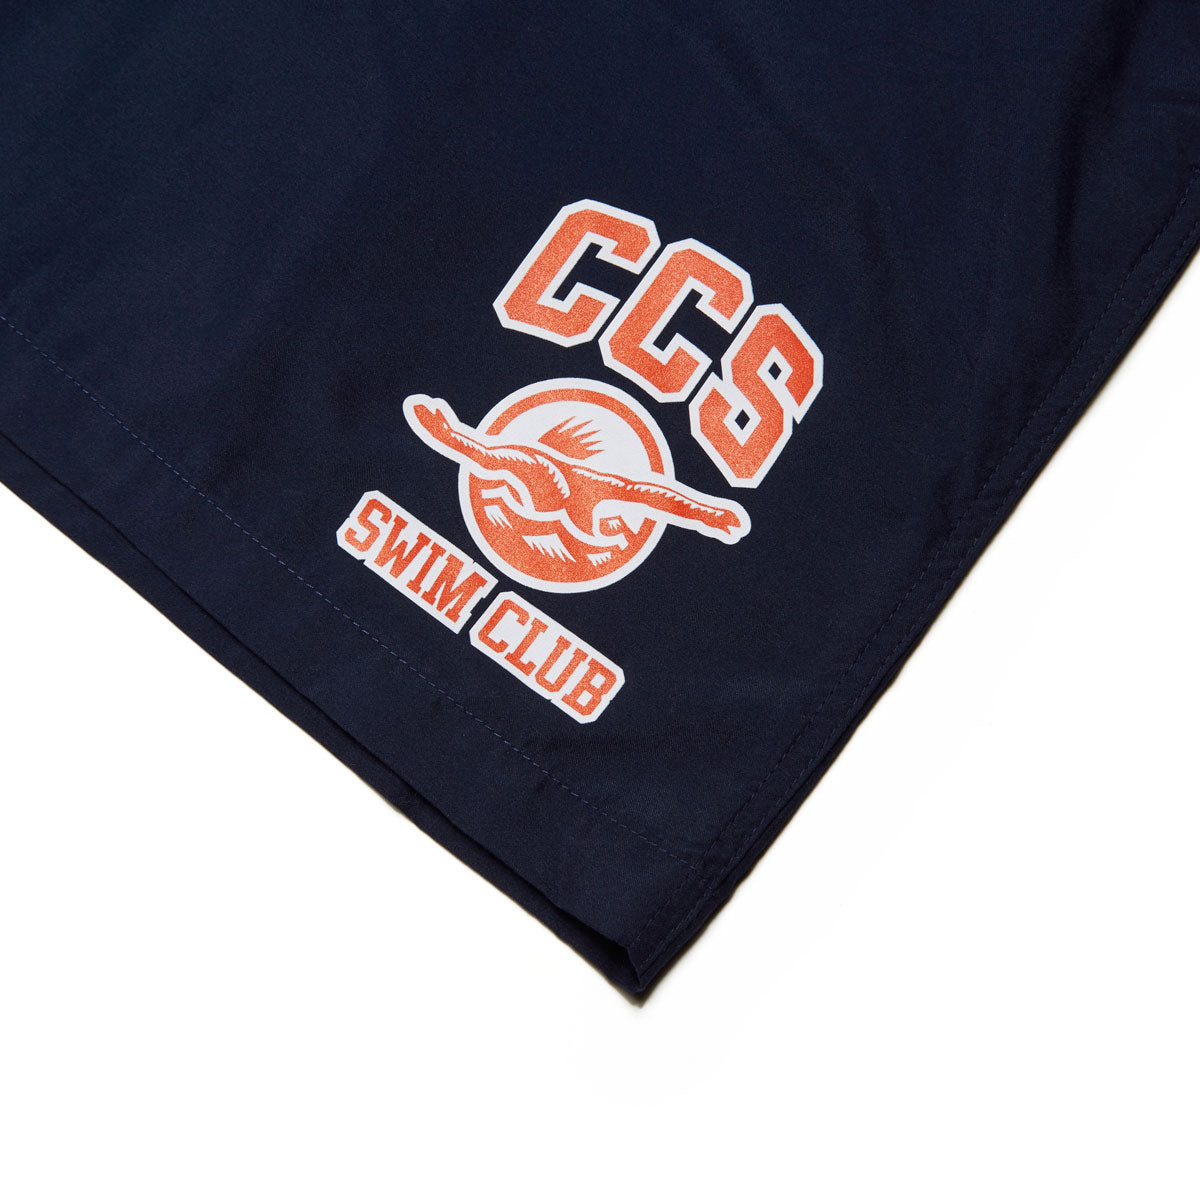 CCS Swim Club Hybrid Shorts - Navy image 2